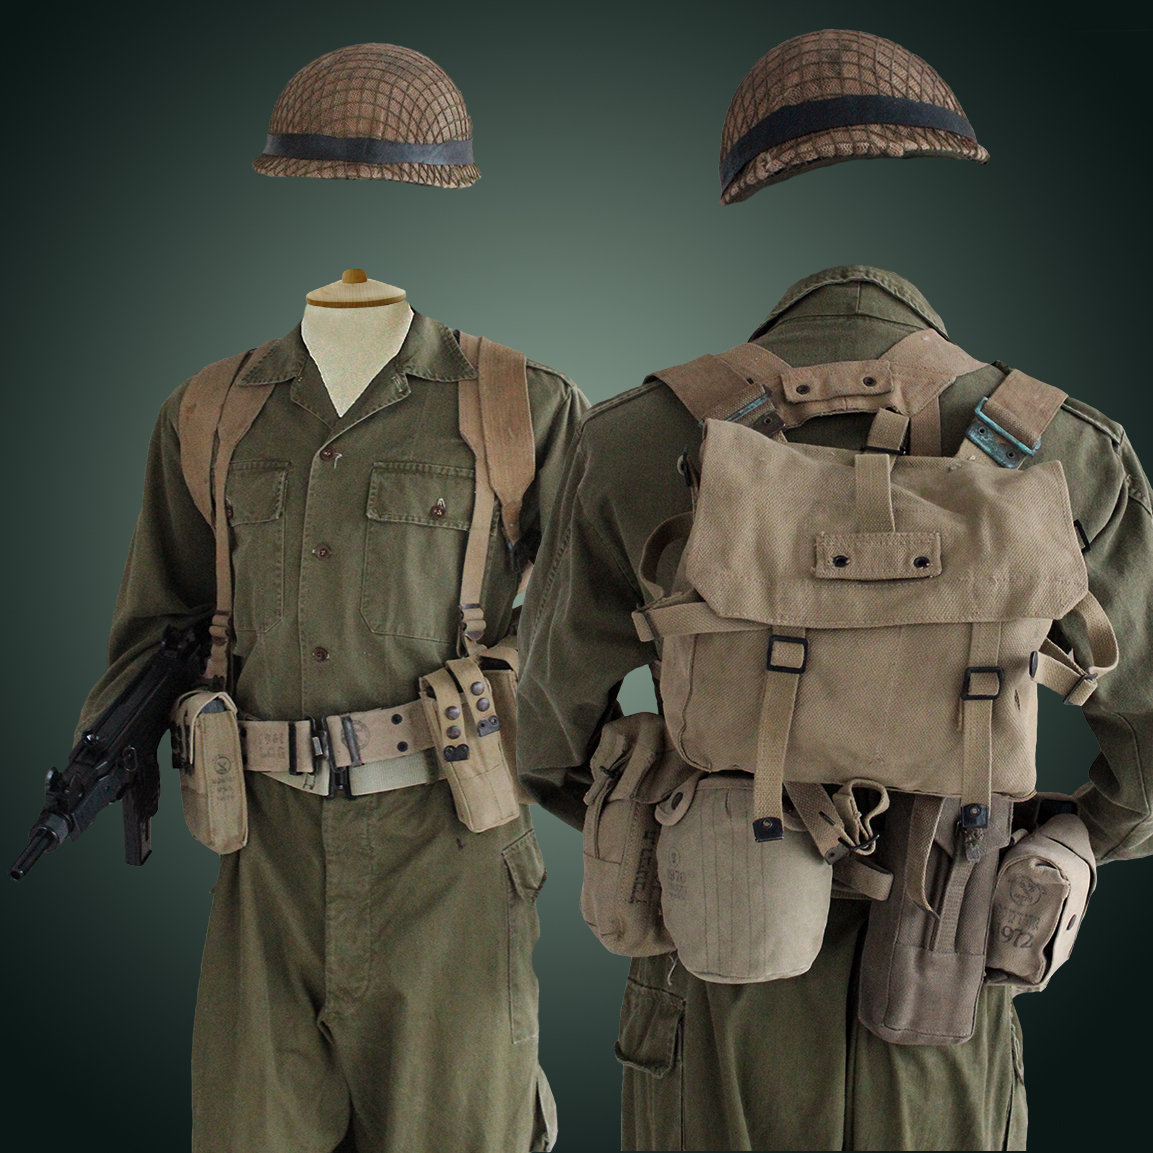 1970s Soldat de Tsahal Israel - La compagnie du costume